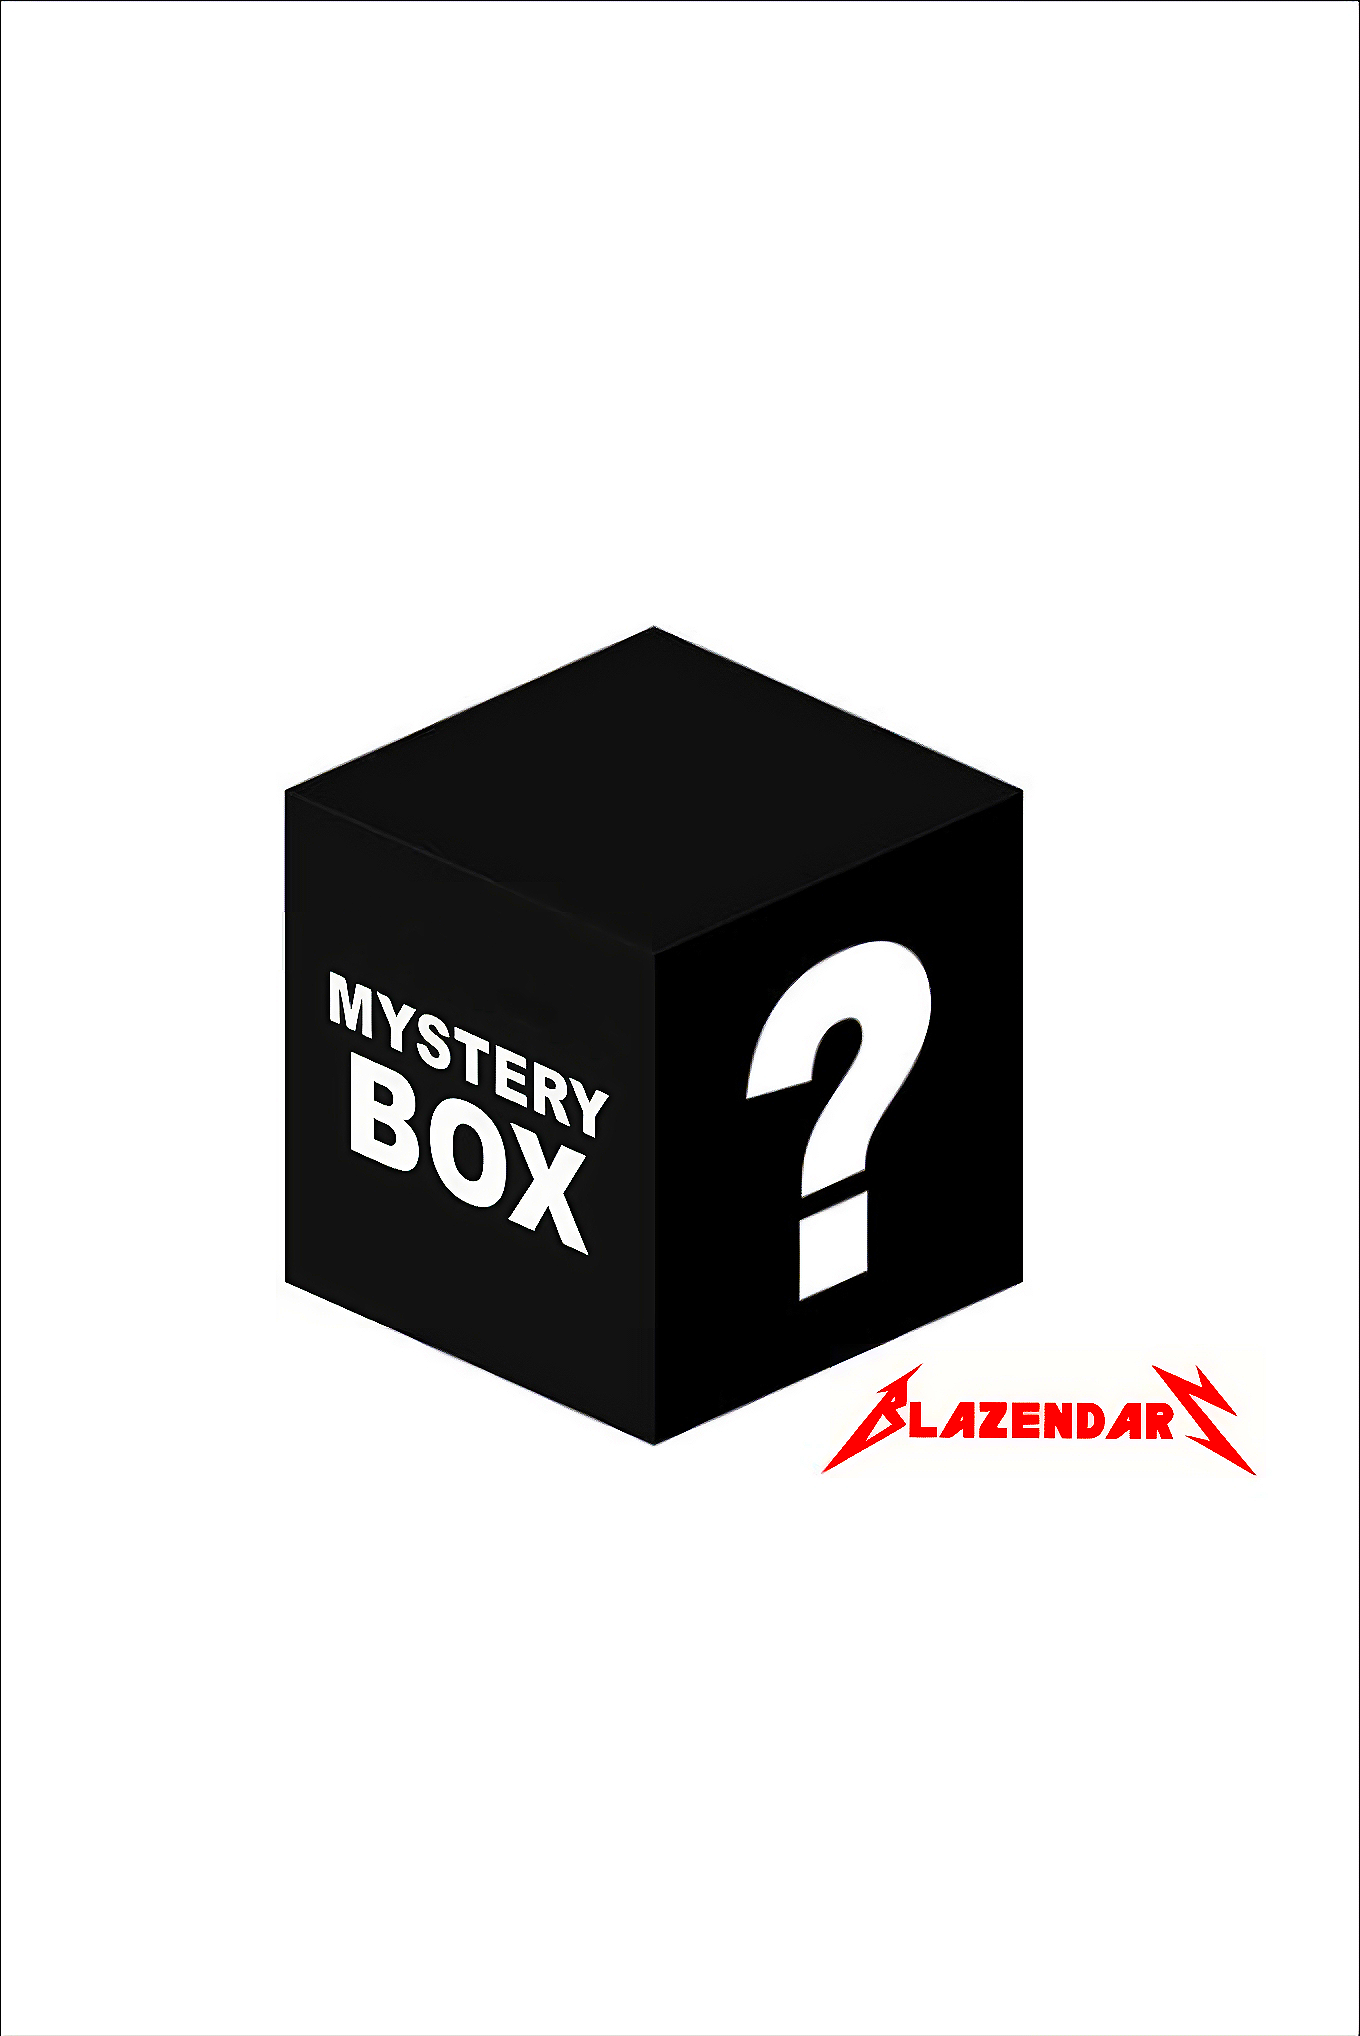 BLAZENDARY MYSTERY BOX